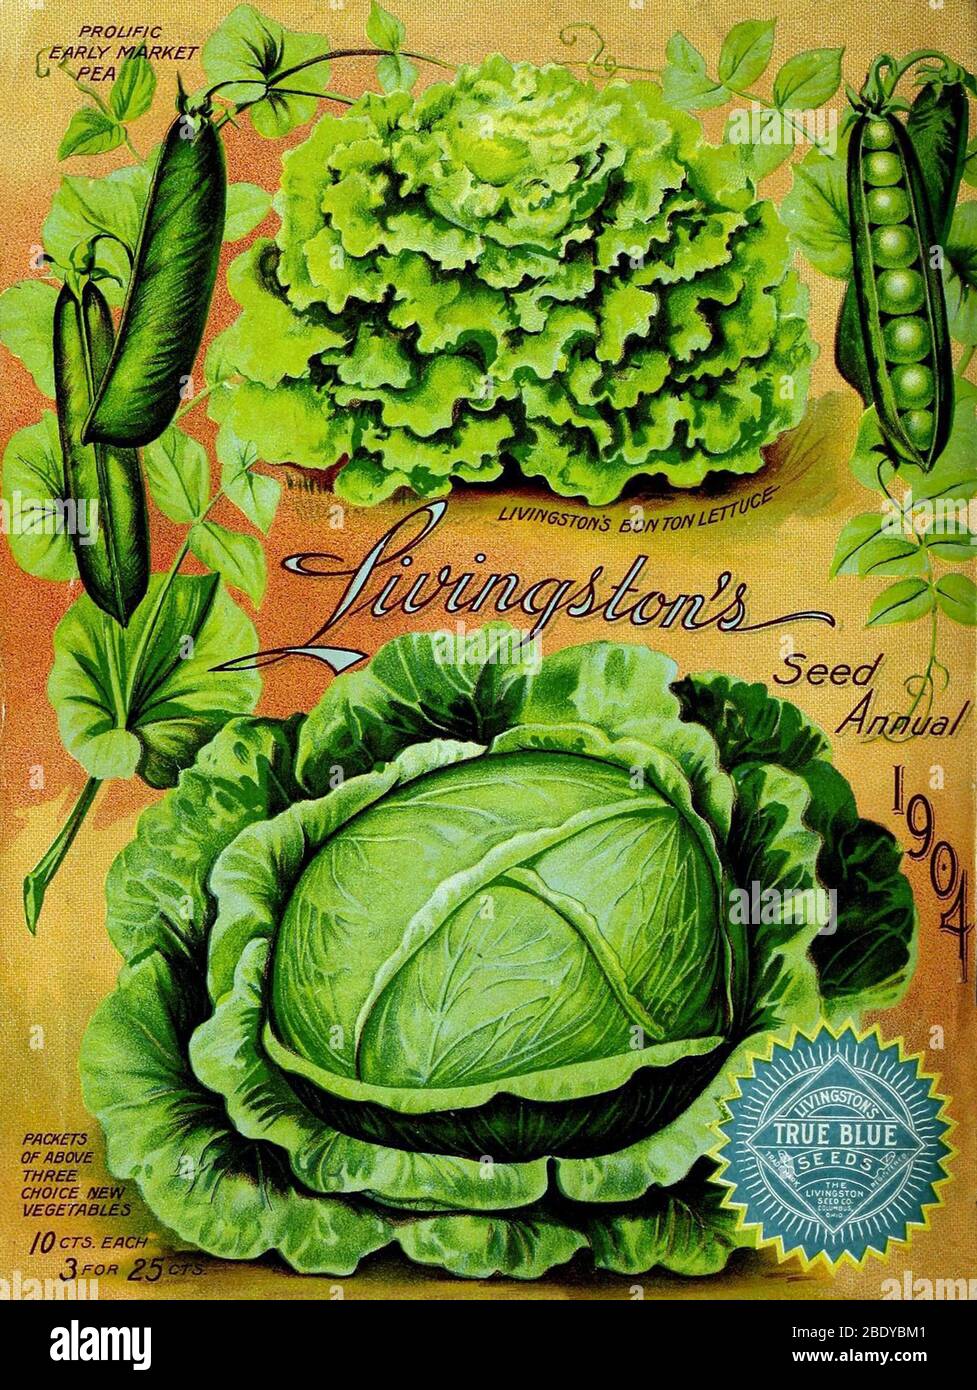 Légumes, Livingston Seed Co., 1904 Banque D'Images